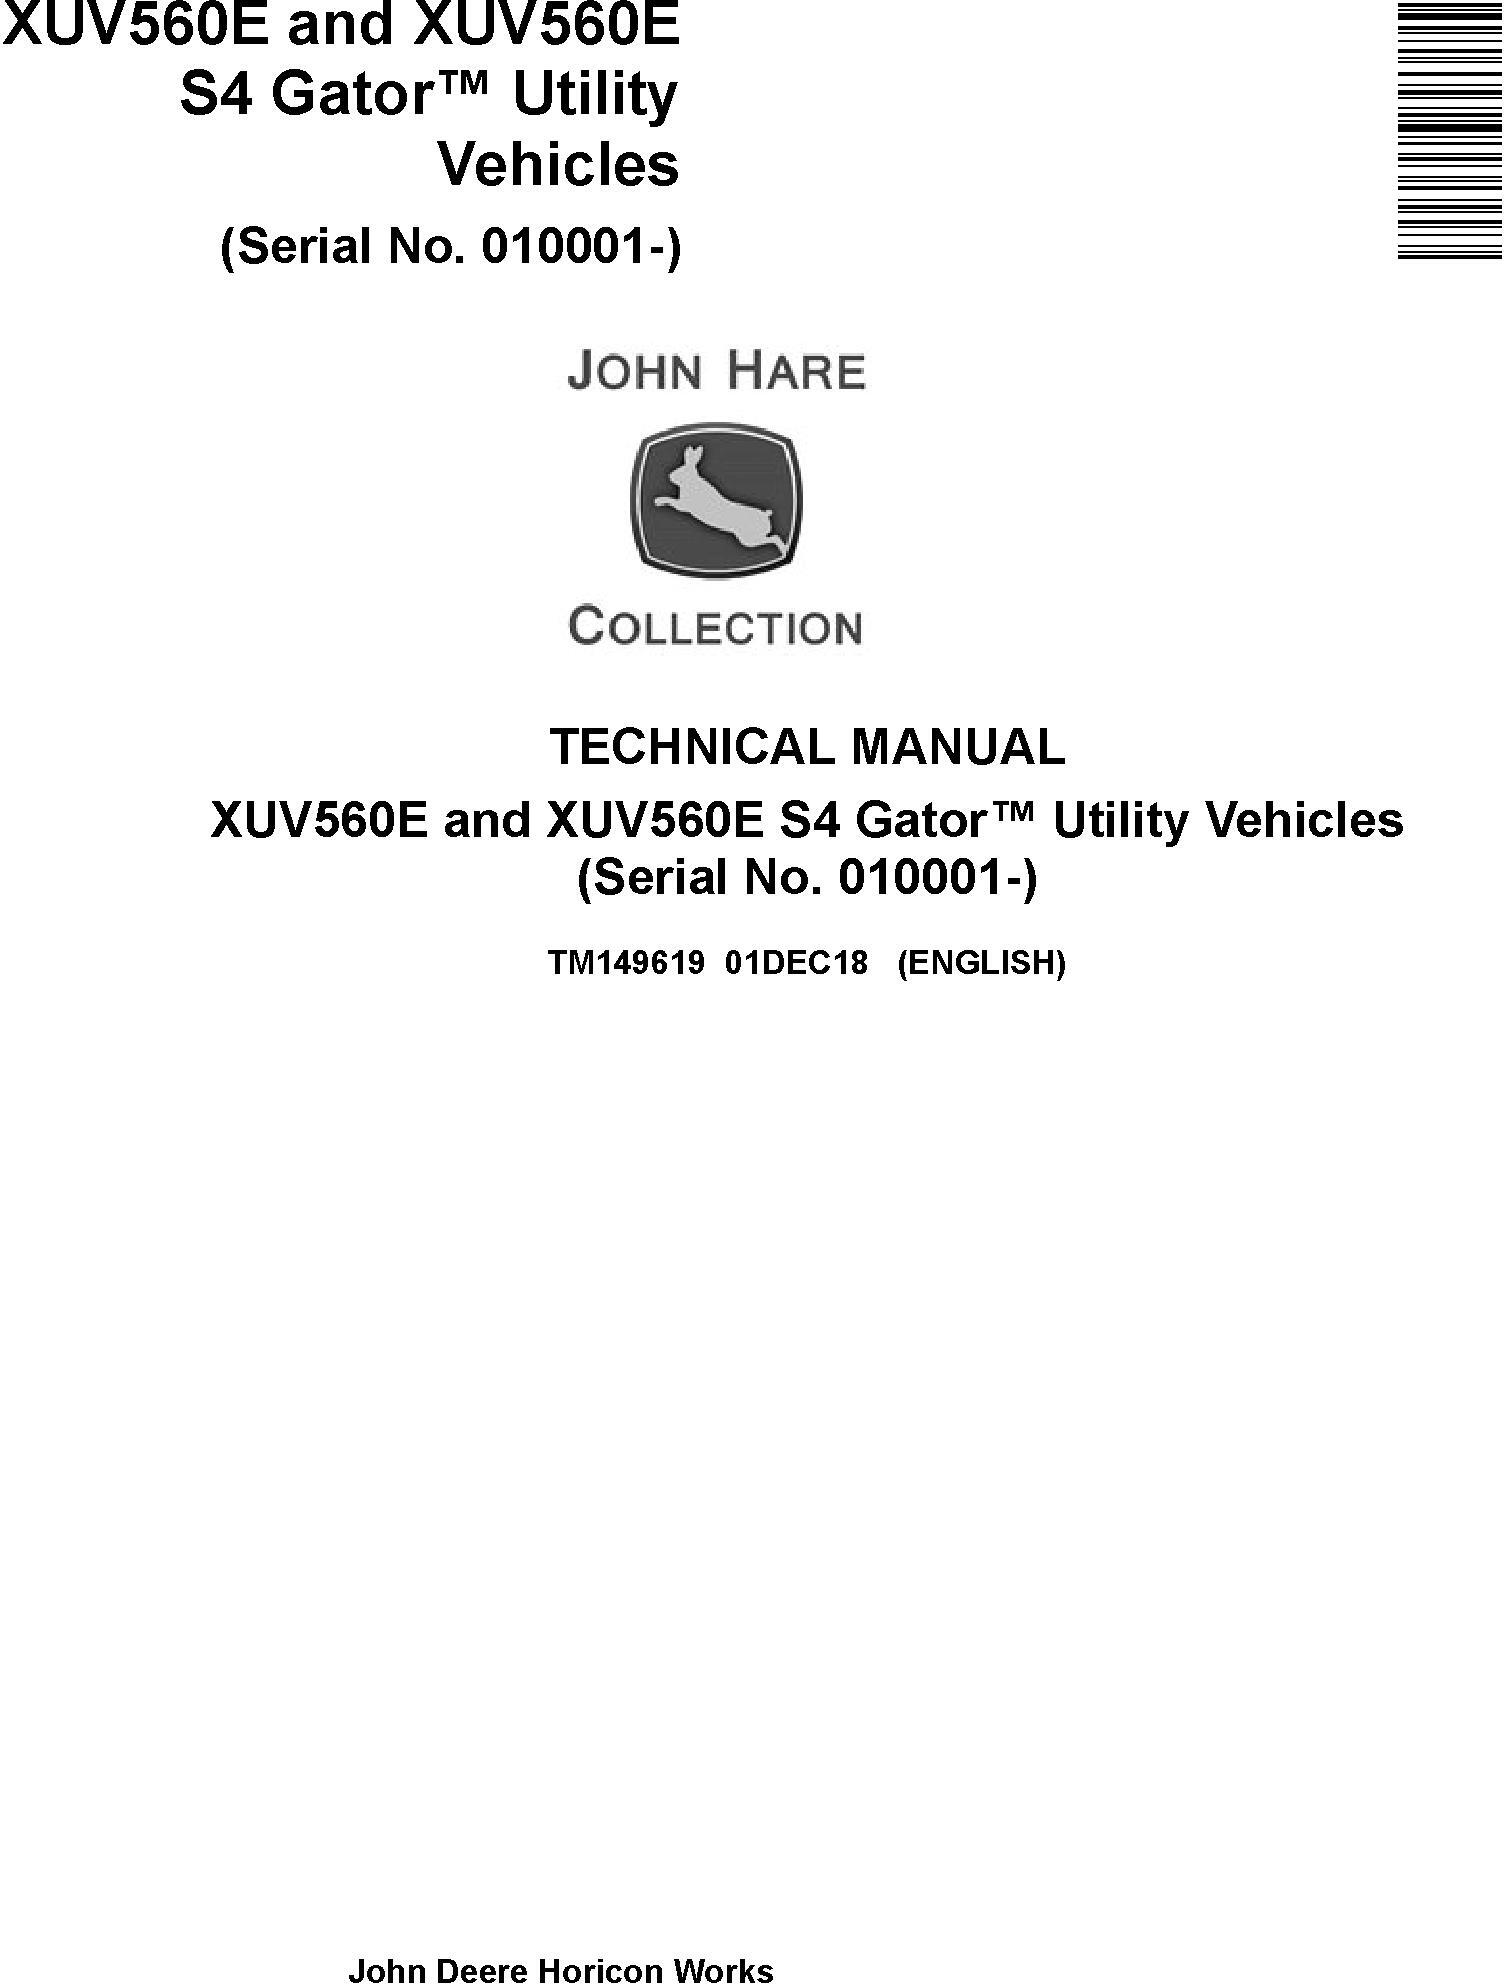 John Deere XUV560E XUV560E S4 Gator Utility Vehicles Technical Manual TM149619